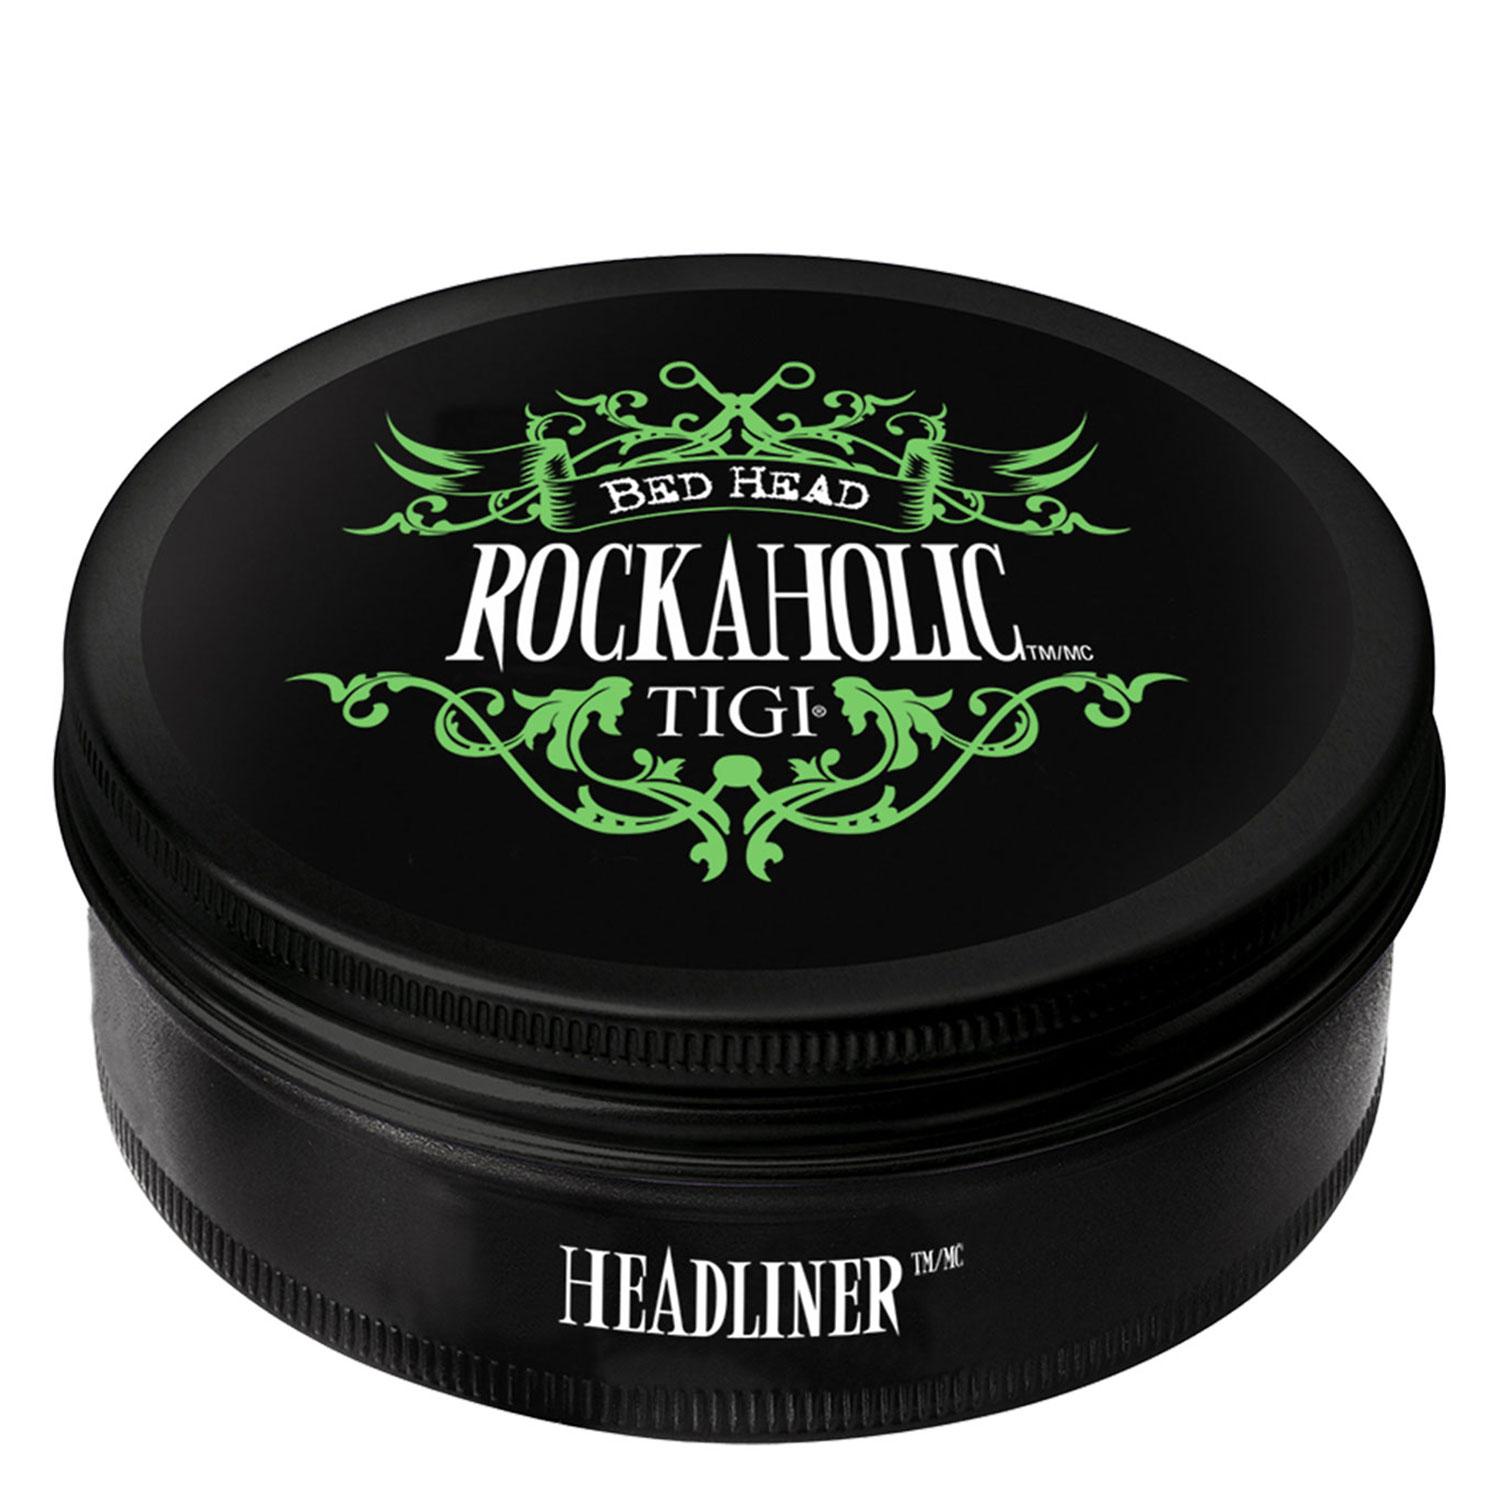 Bed Head Rockaholic - Headliner Styling Paste